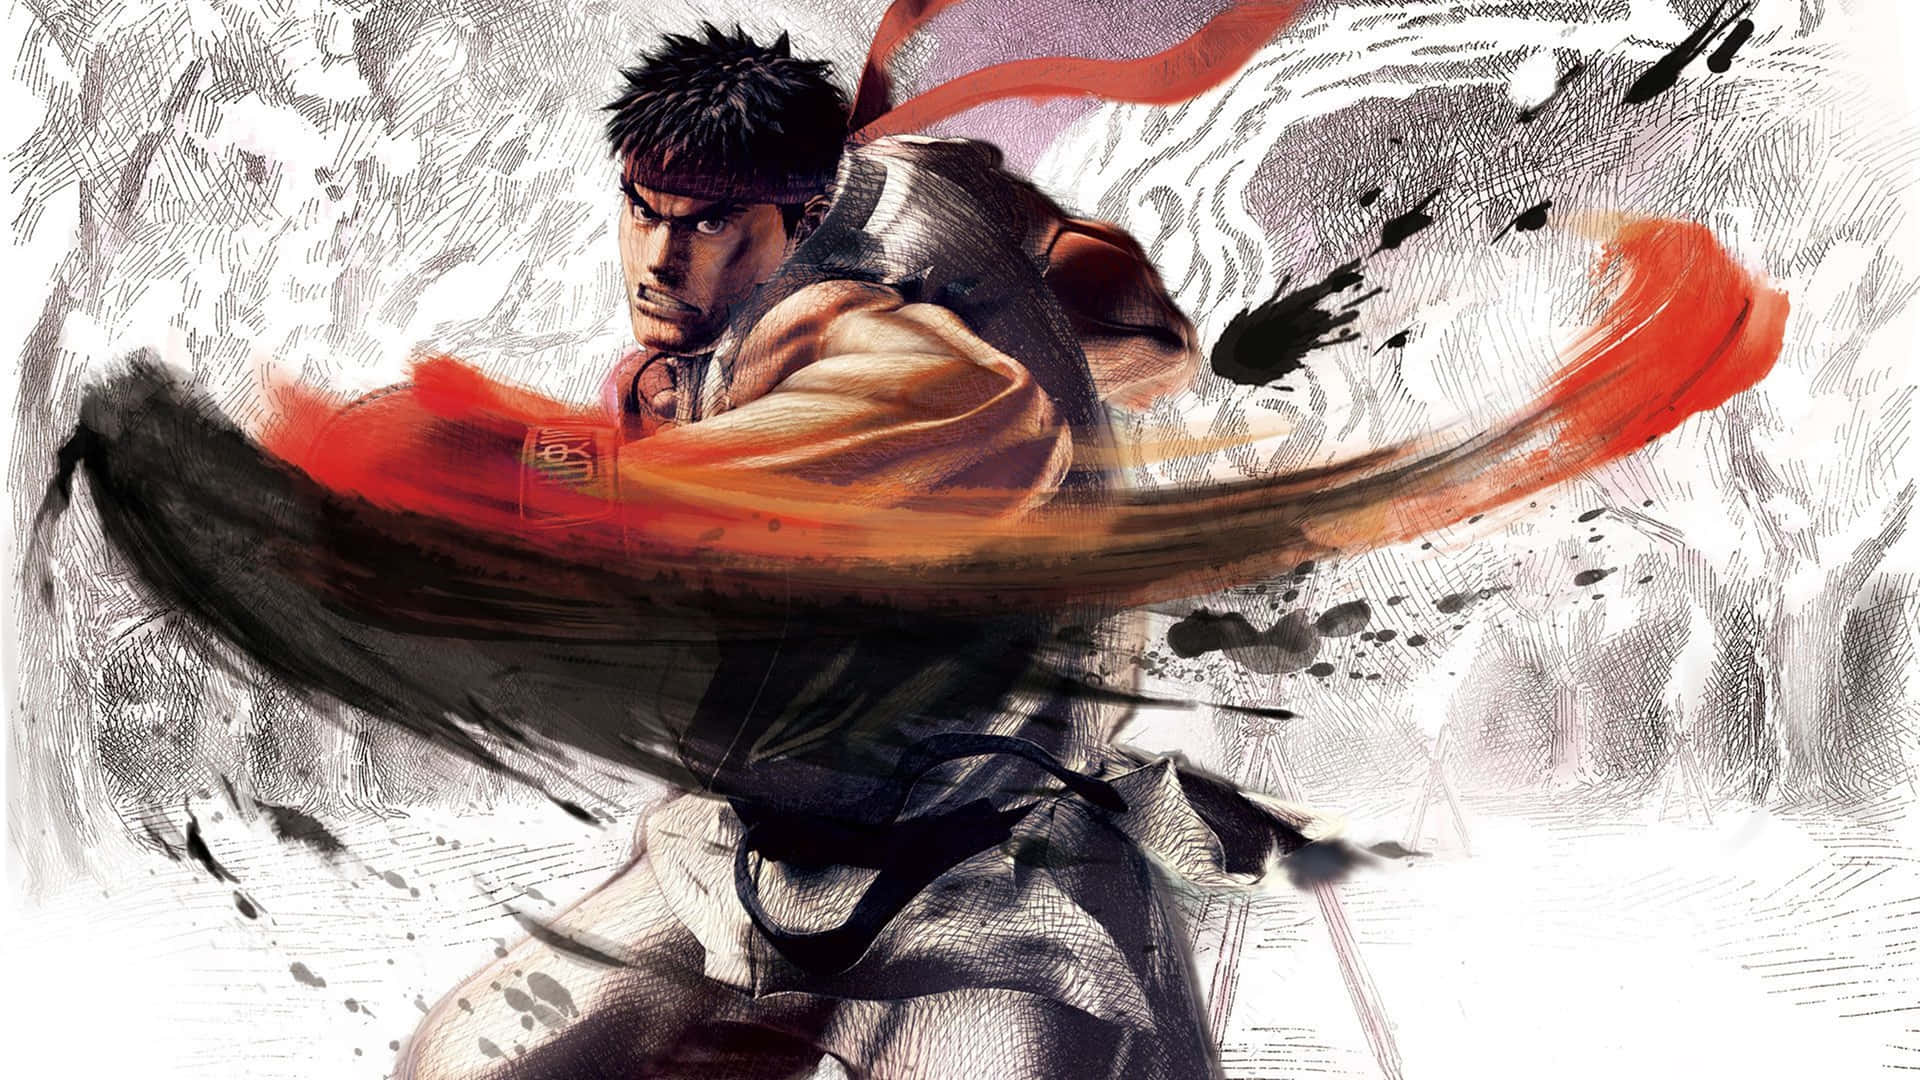 Download Ryu Vs Ken Street Fighter 4 Wallpaper